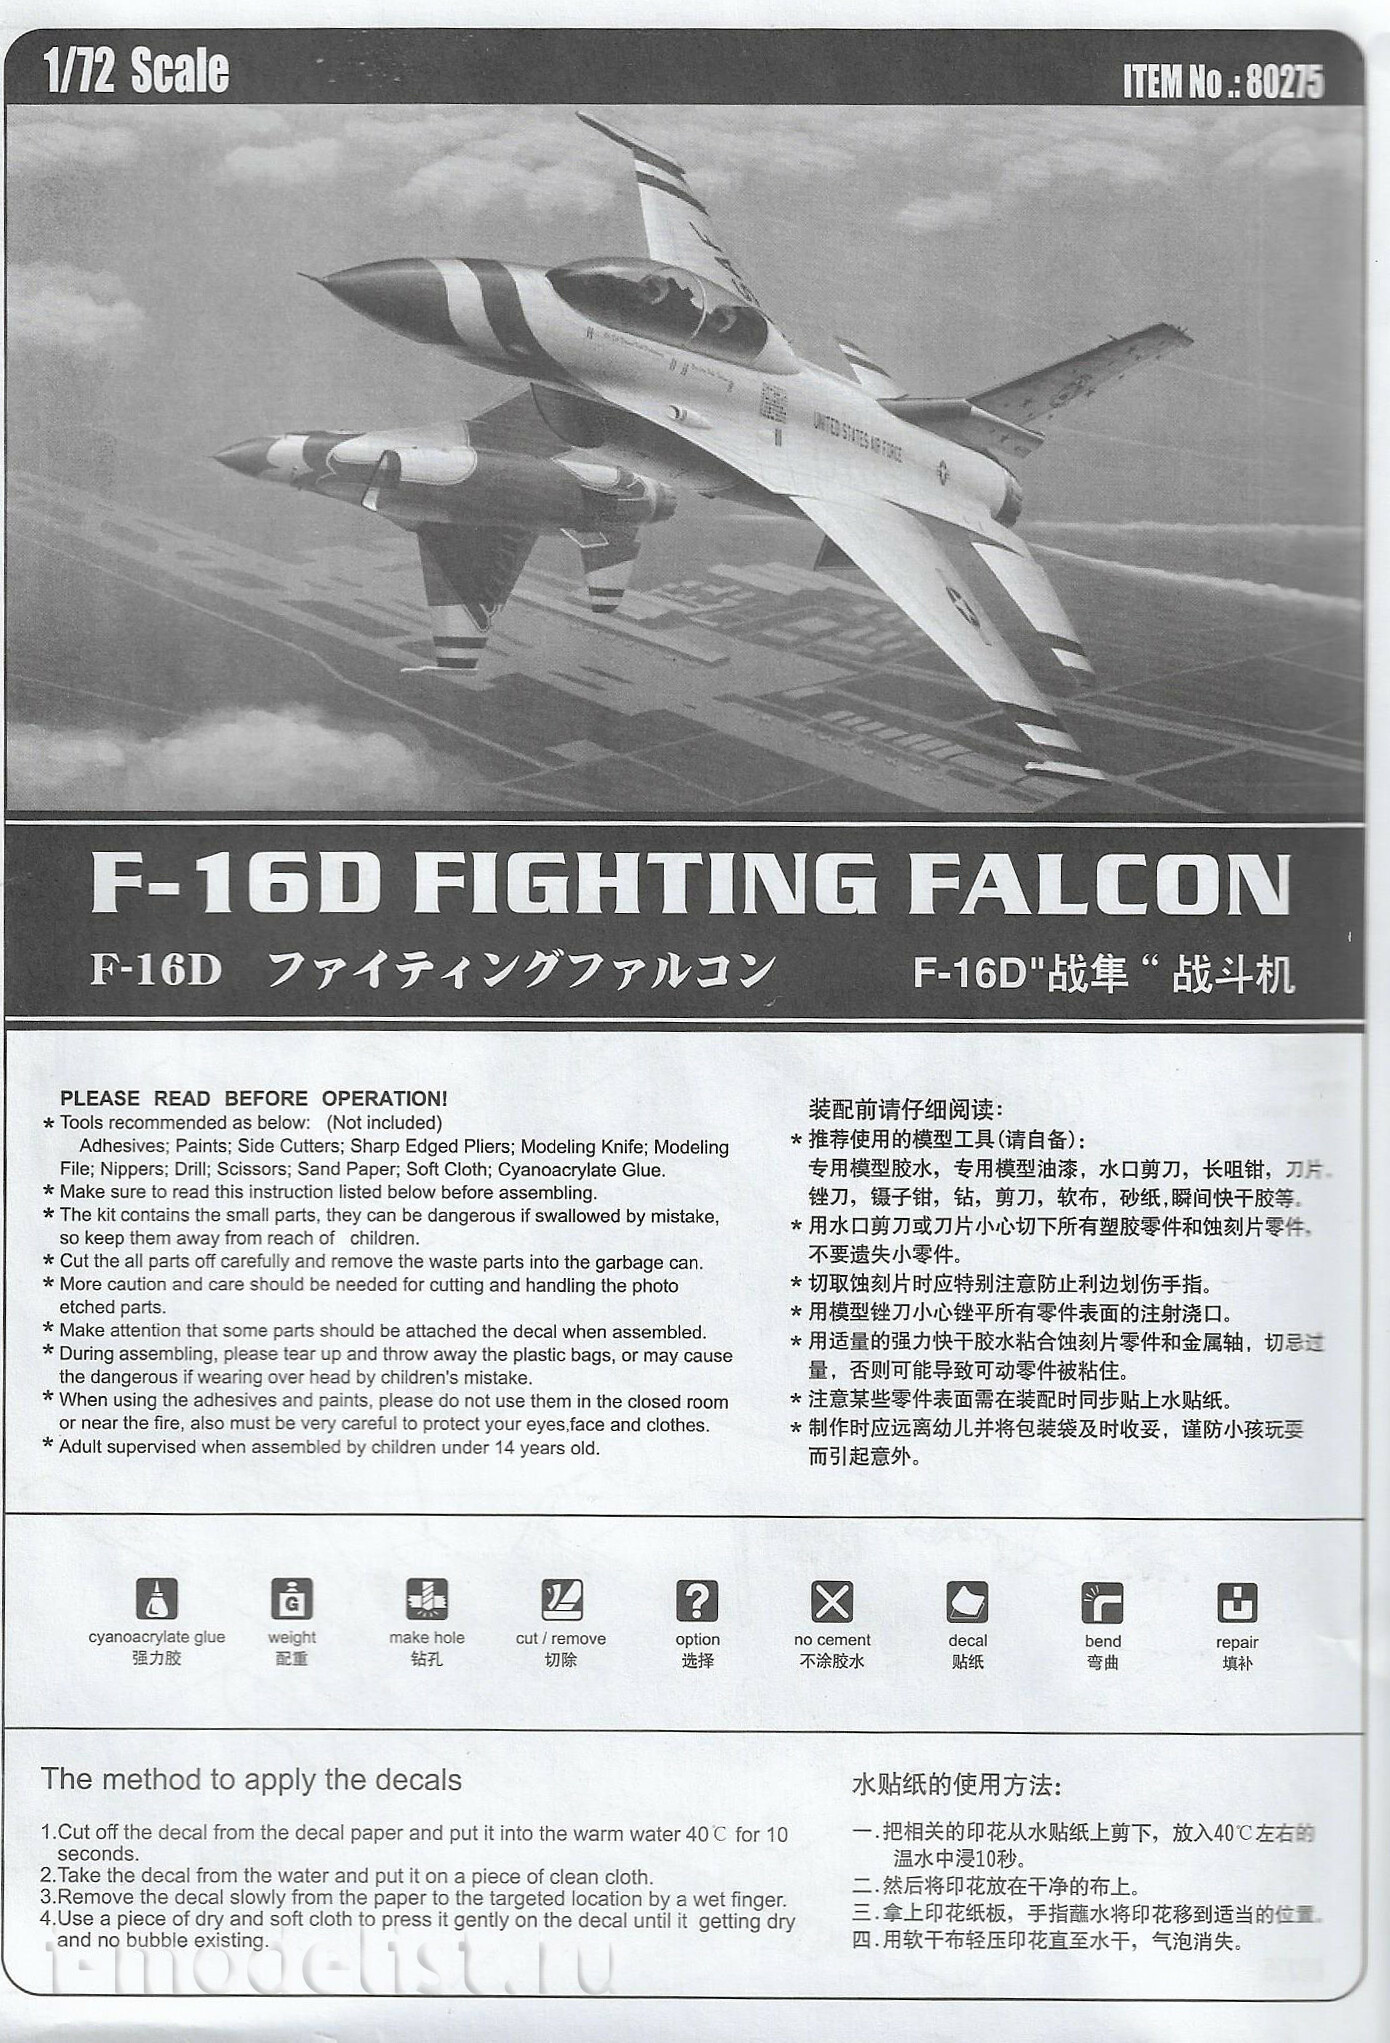 80275 HobbyBoss 1/72 Самолет F-16D Fighting Falcon